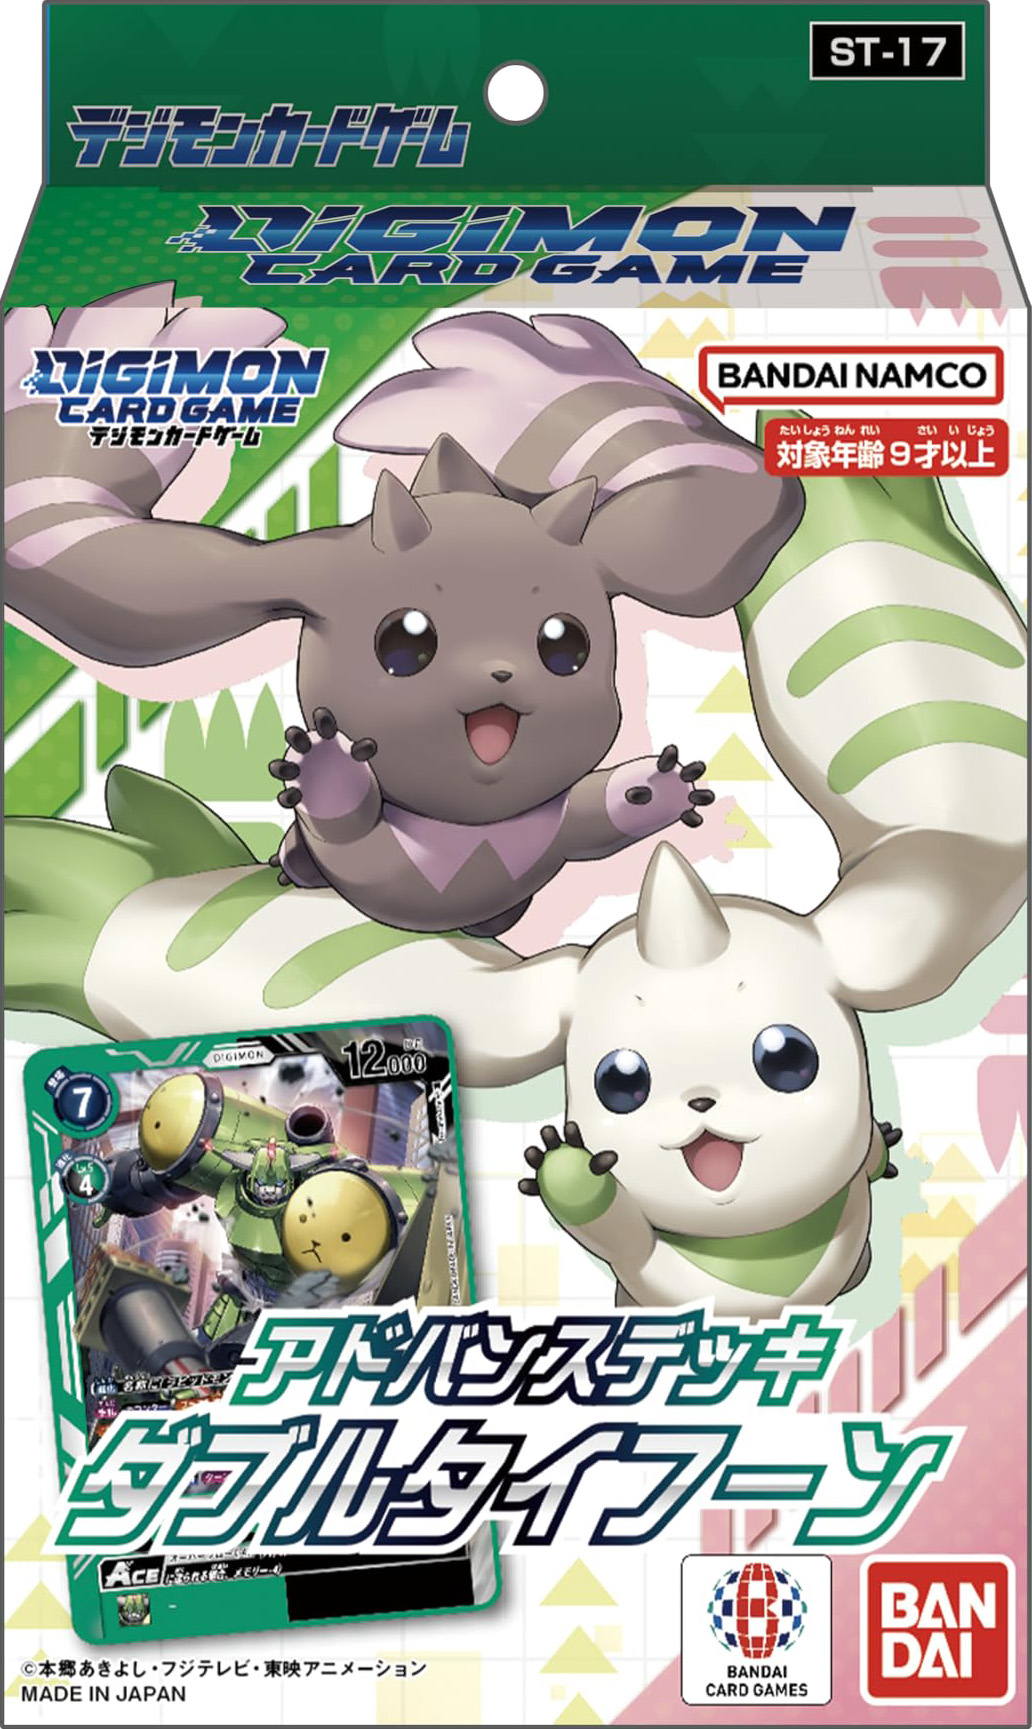 Promo] Digimon Adventure 02: The Beginning Promo cards :  r/DigimonCardGame2020